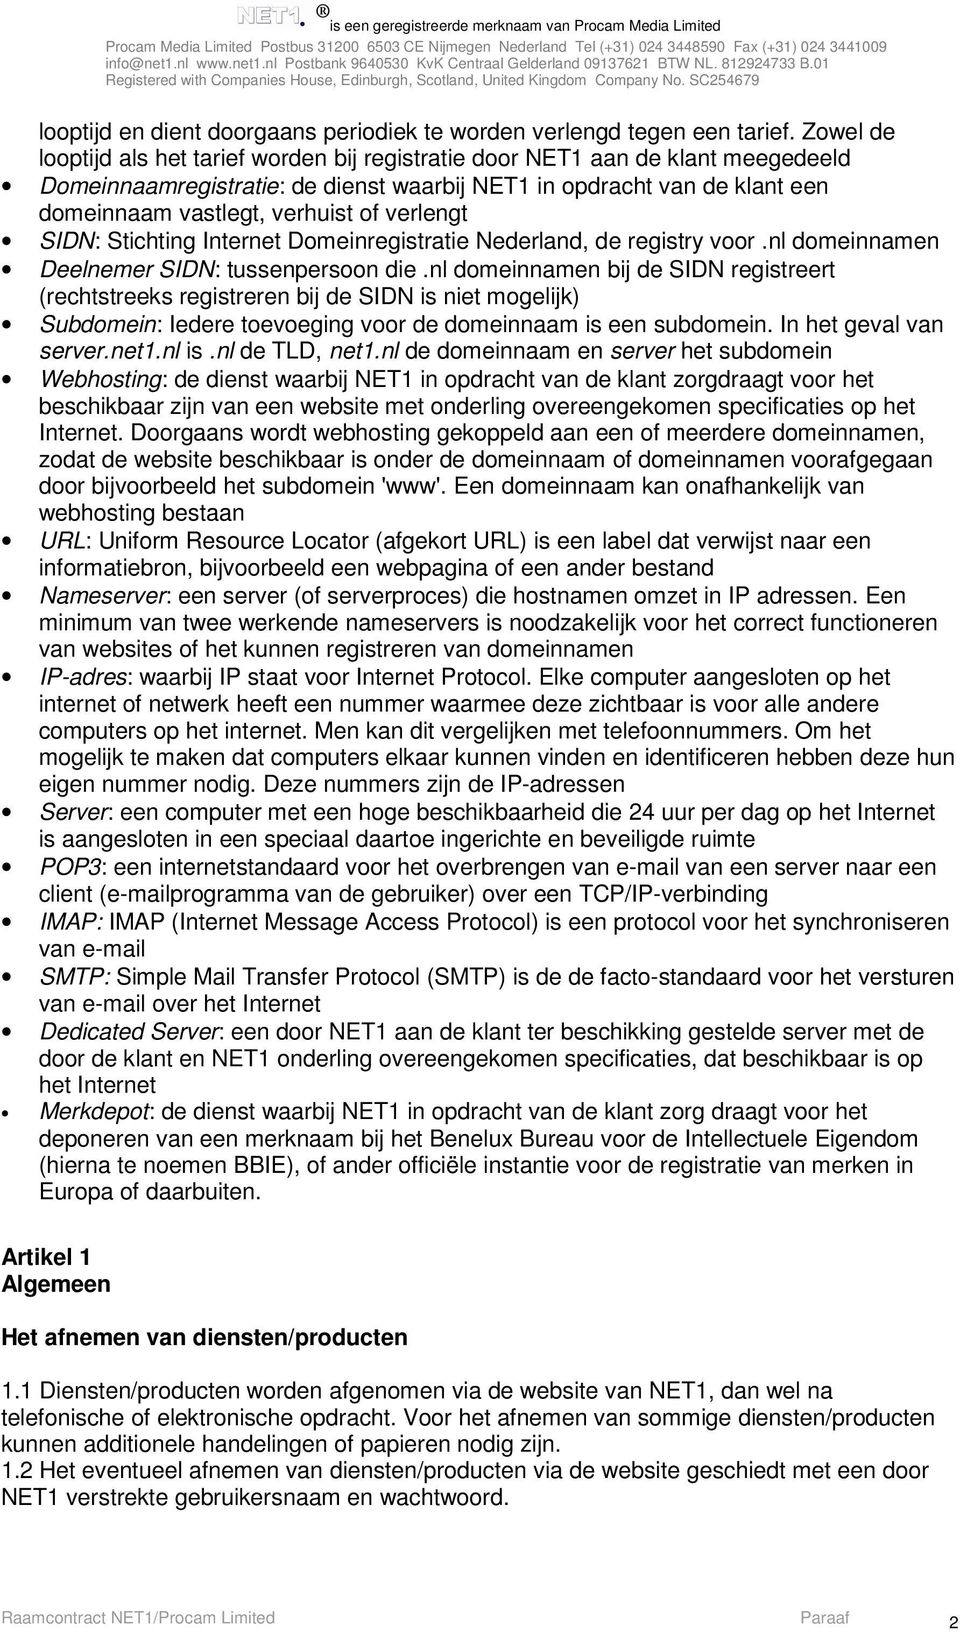 verlengt SIDN: Stichting Internet Domeinregistratie Nederland, de registry voor.nl domeinnamen Deelnemer SIDN: tussenpersoon die.